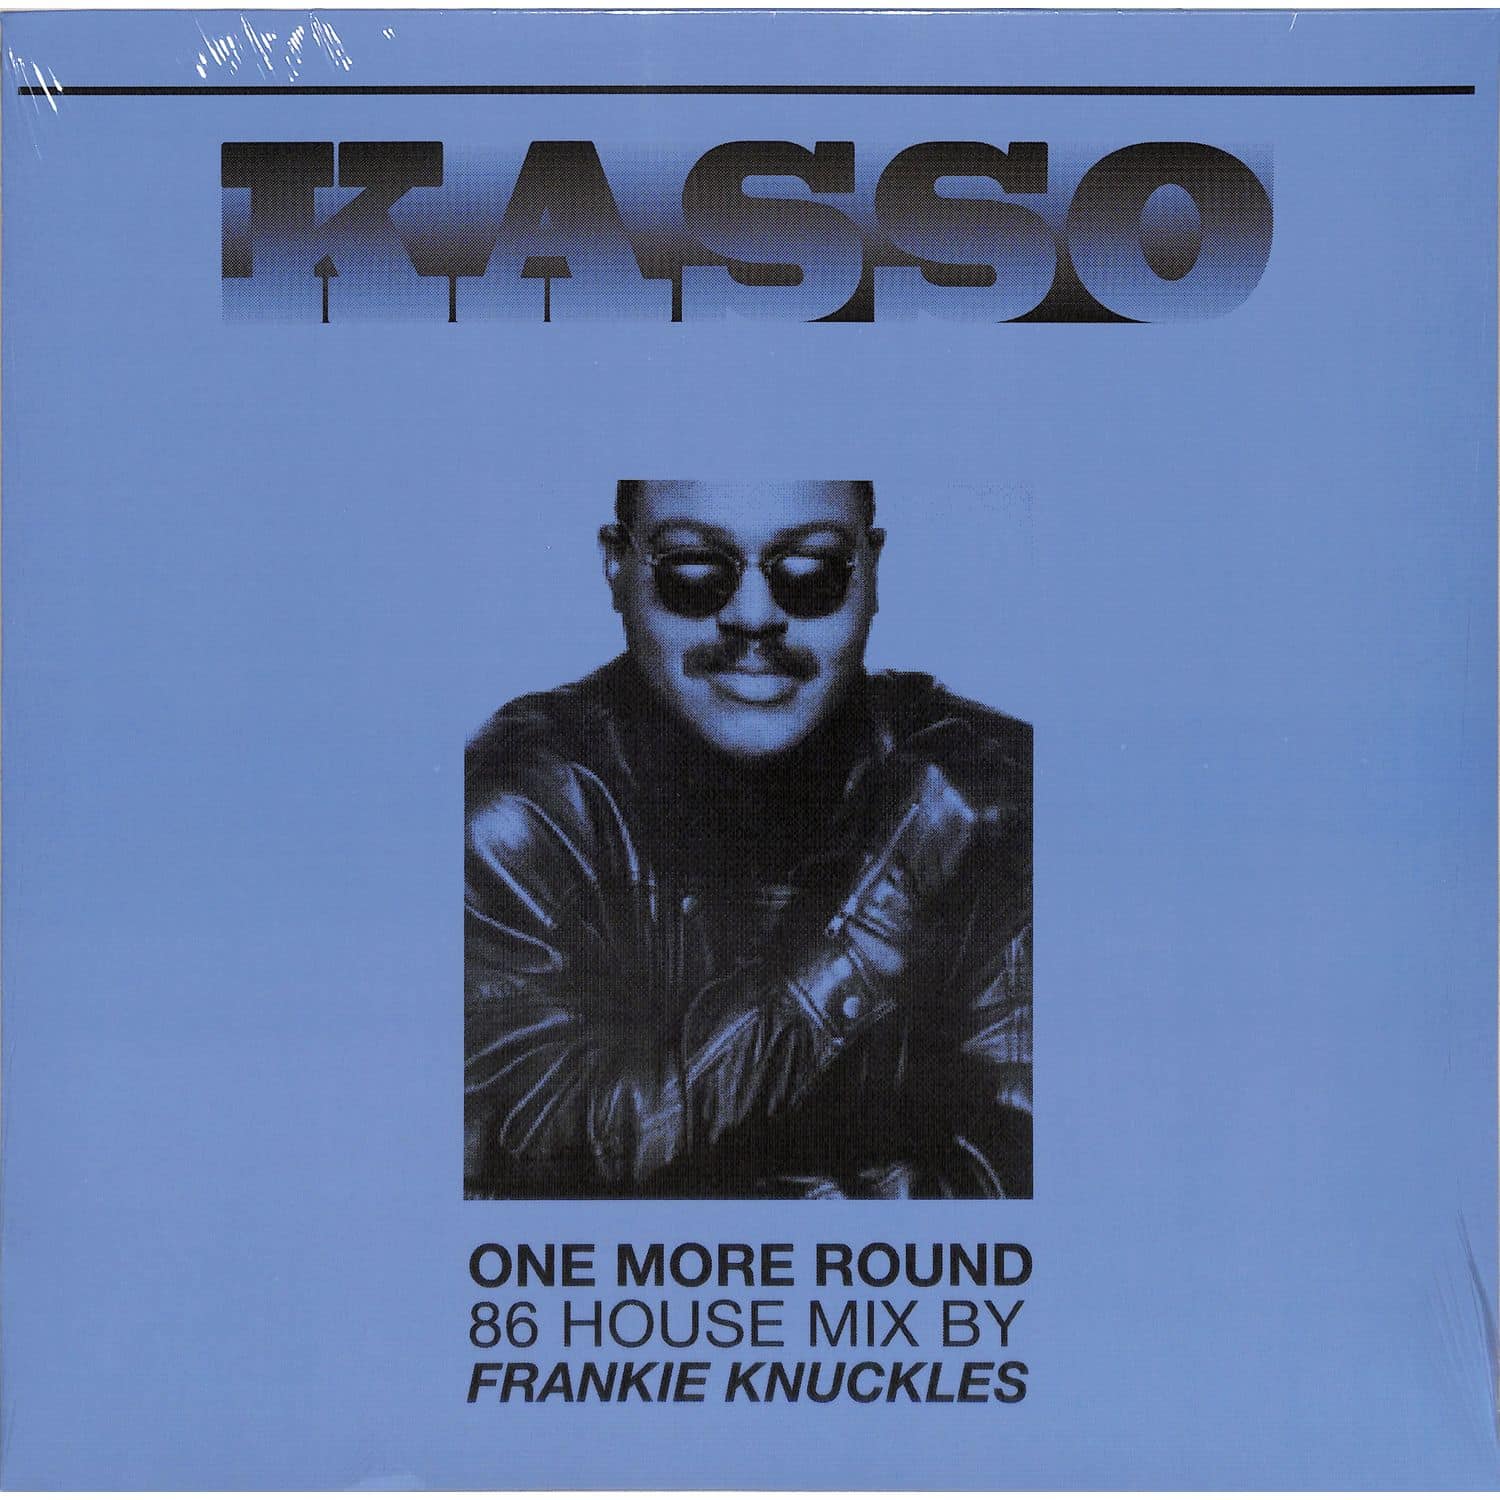 Kasso - KASSO REMIXED BY FRANKIE KNUCKLES 